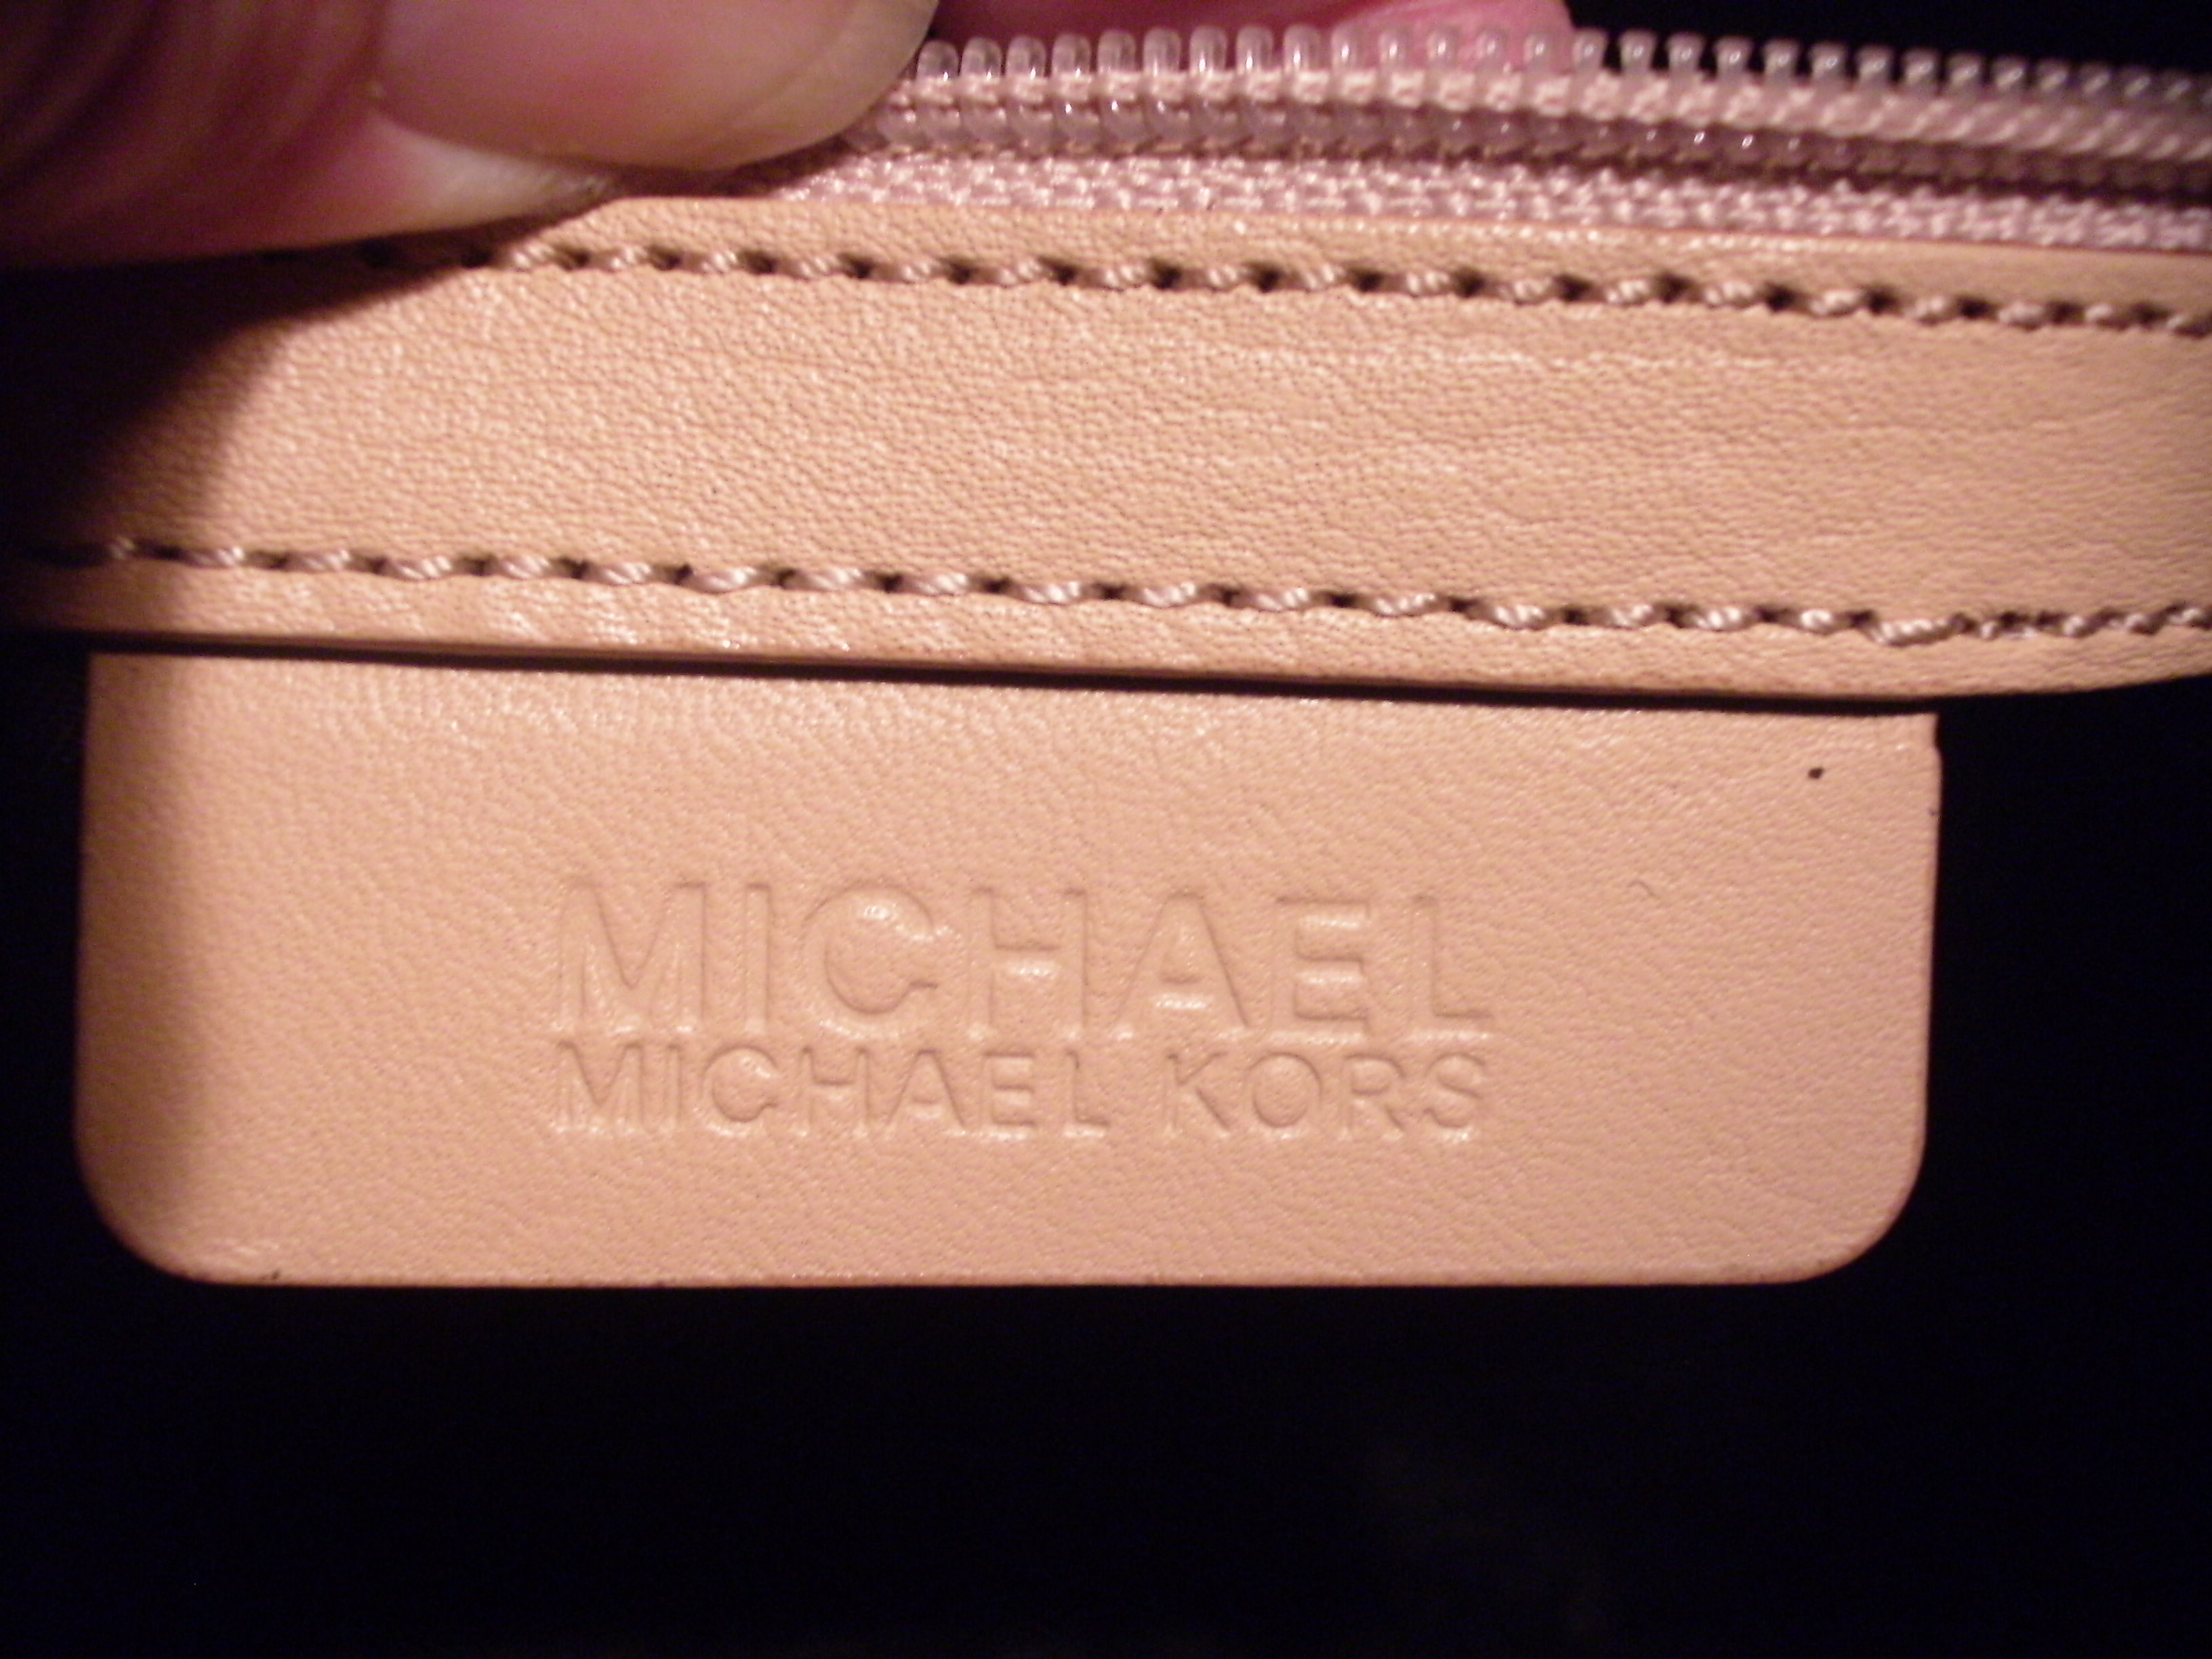 Michael Michael Kors Bag - The eBay 